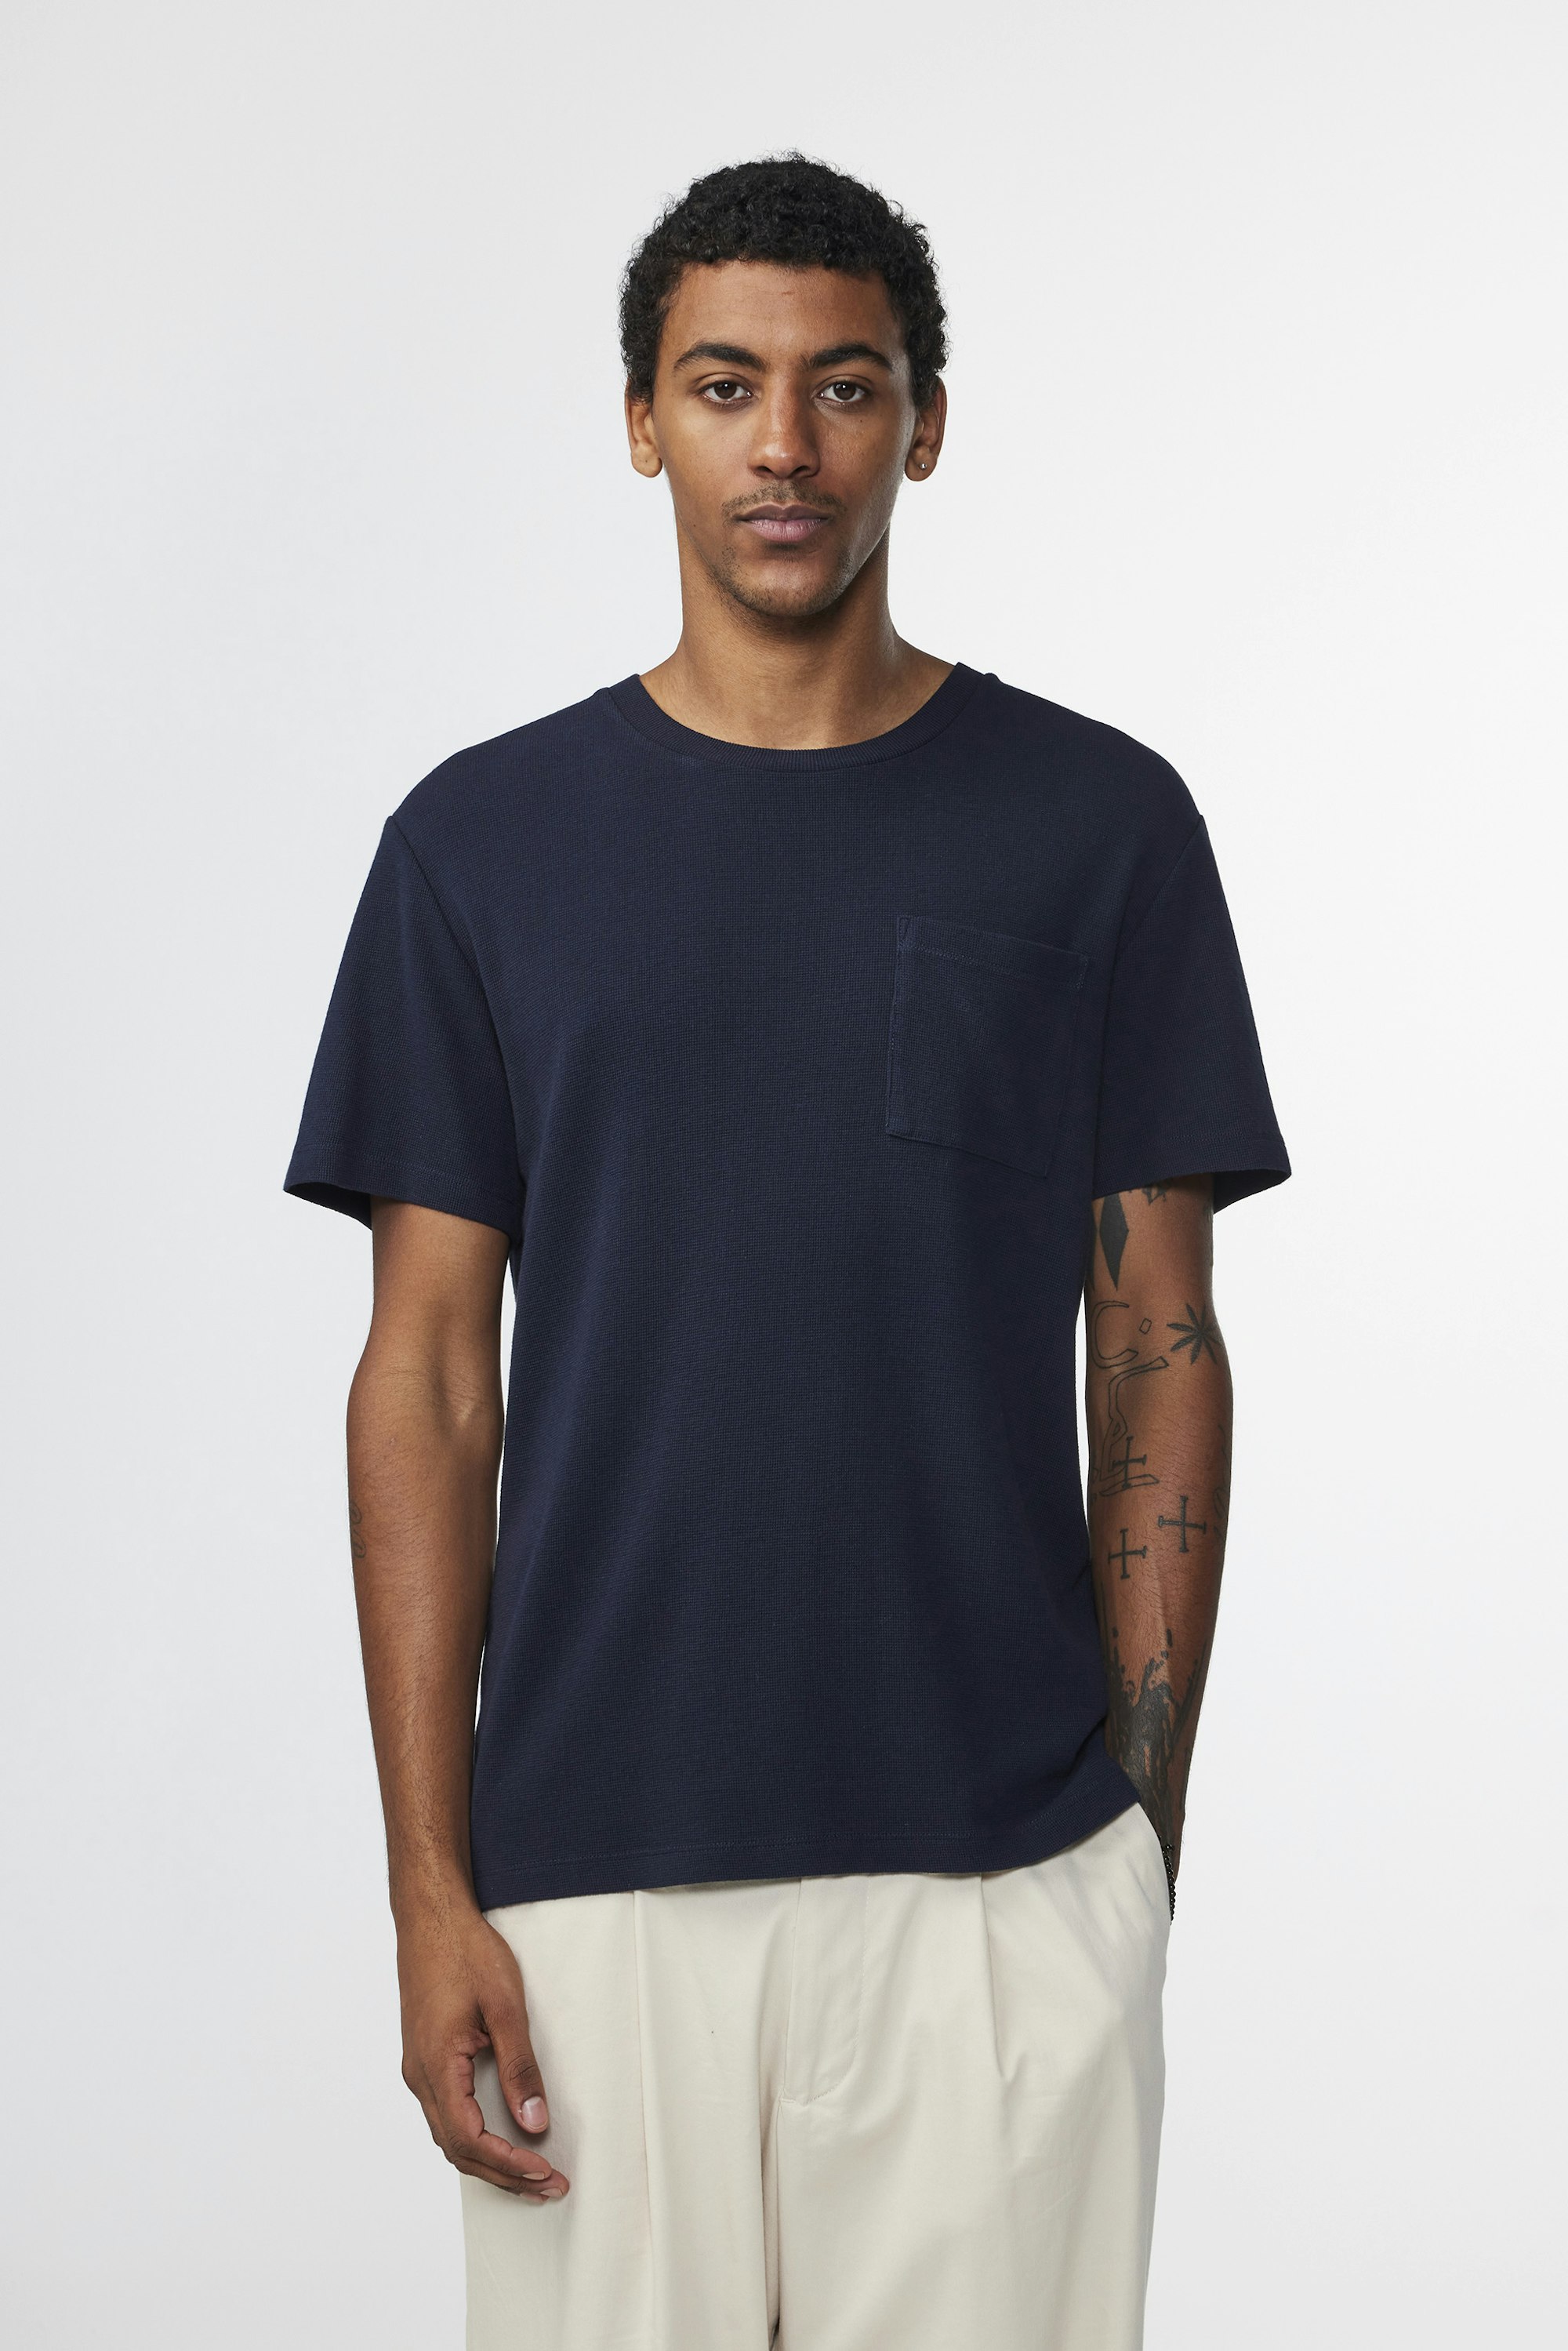 Clive 3323 men\'s t-shirt - Blue - Buy online at